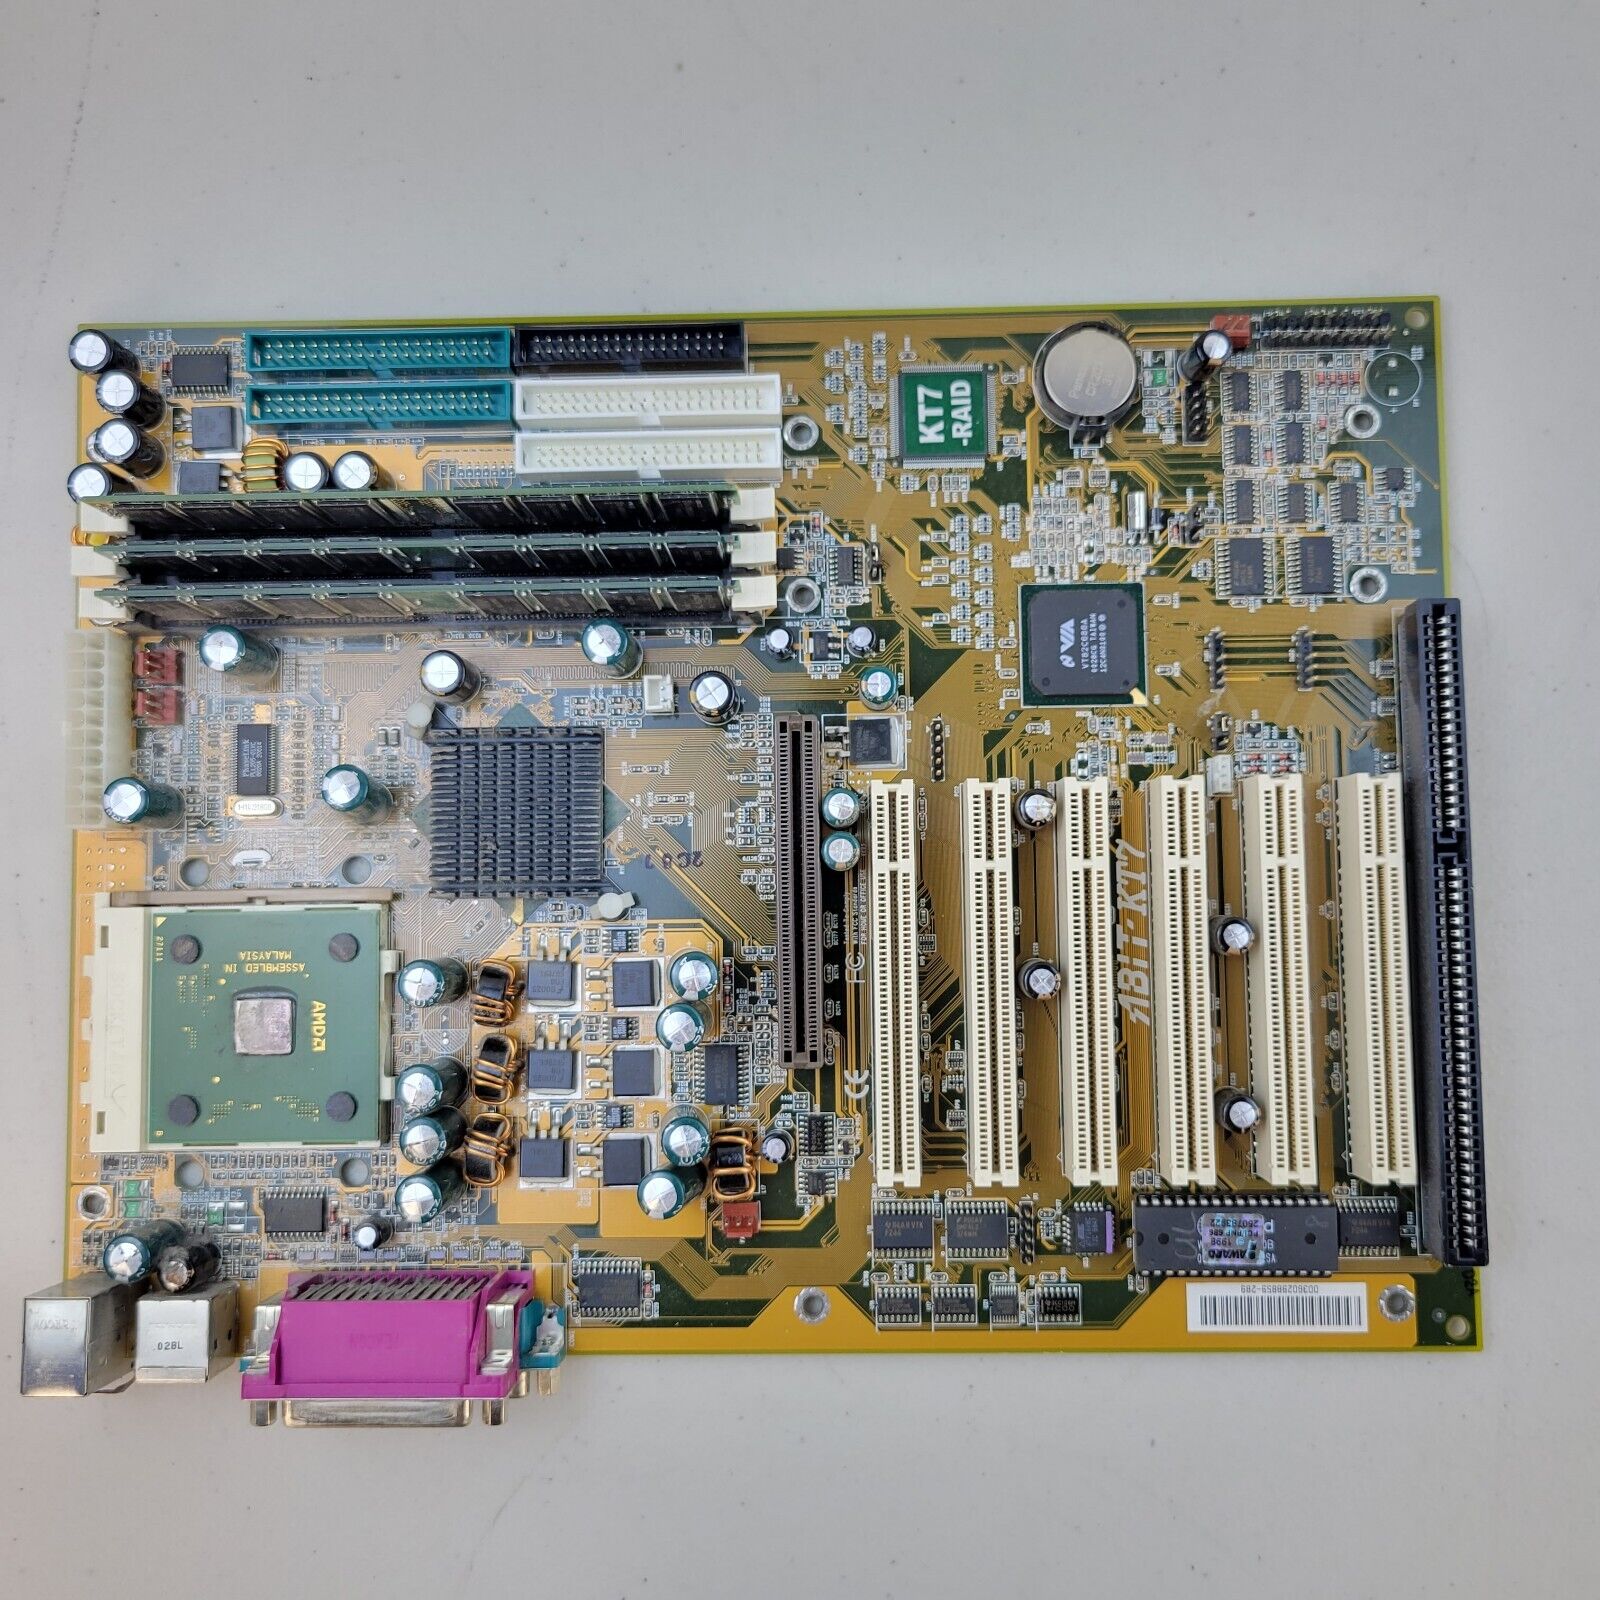 ABIT FP-274-C24-89 Yang E114139 Motherboard Mainboard KT7-RAID with Ram